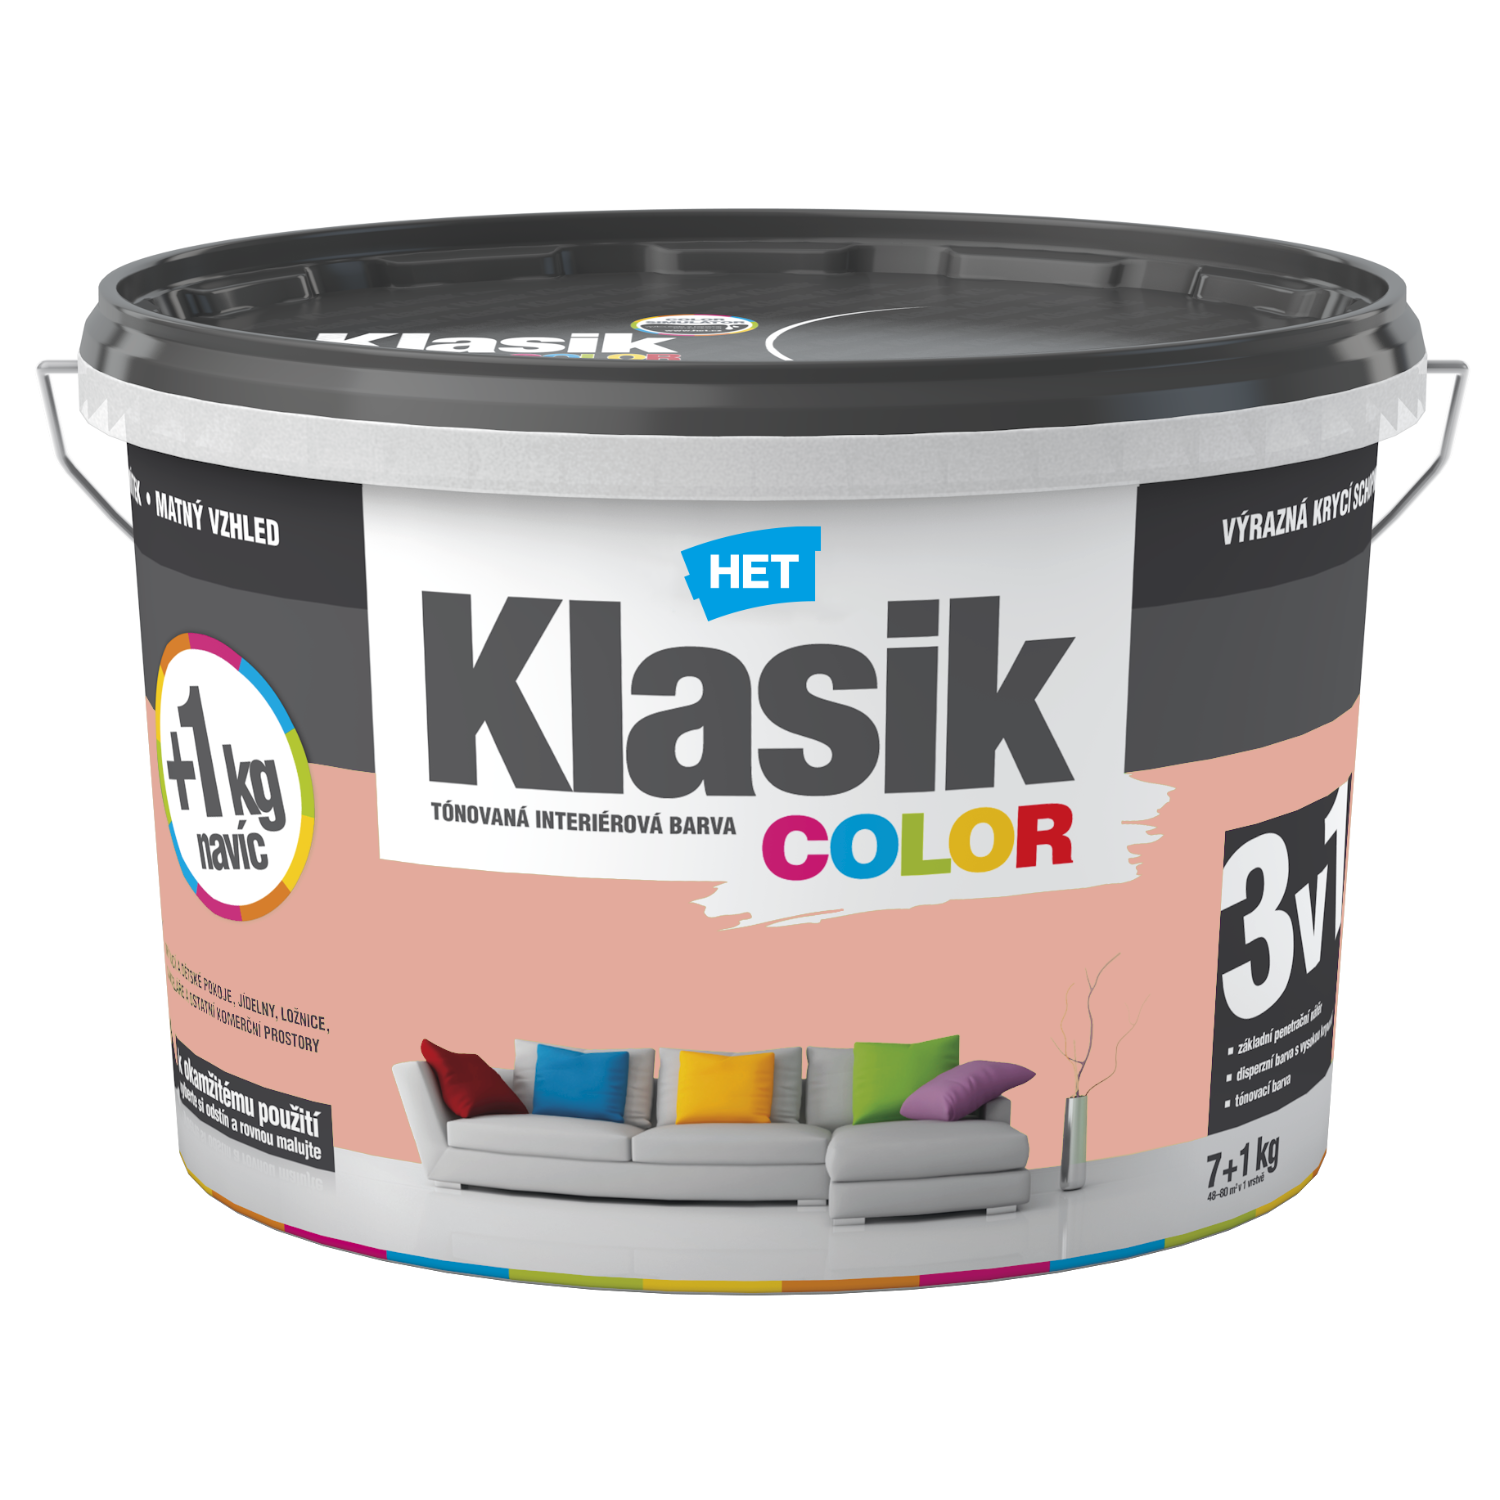 HET Klasik COLOR tónovaná interiérová akrylátová disperzná oteruvzdorná farba 7 kg + 1 kg zdarma, KC0897 - vínový